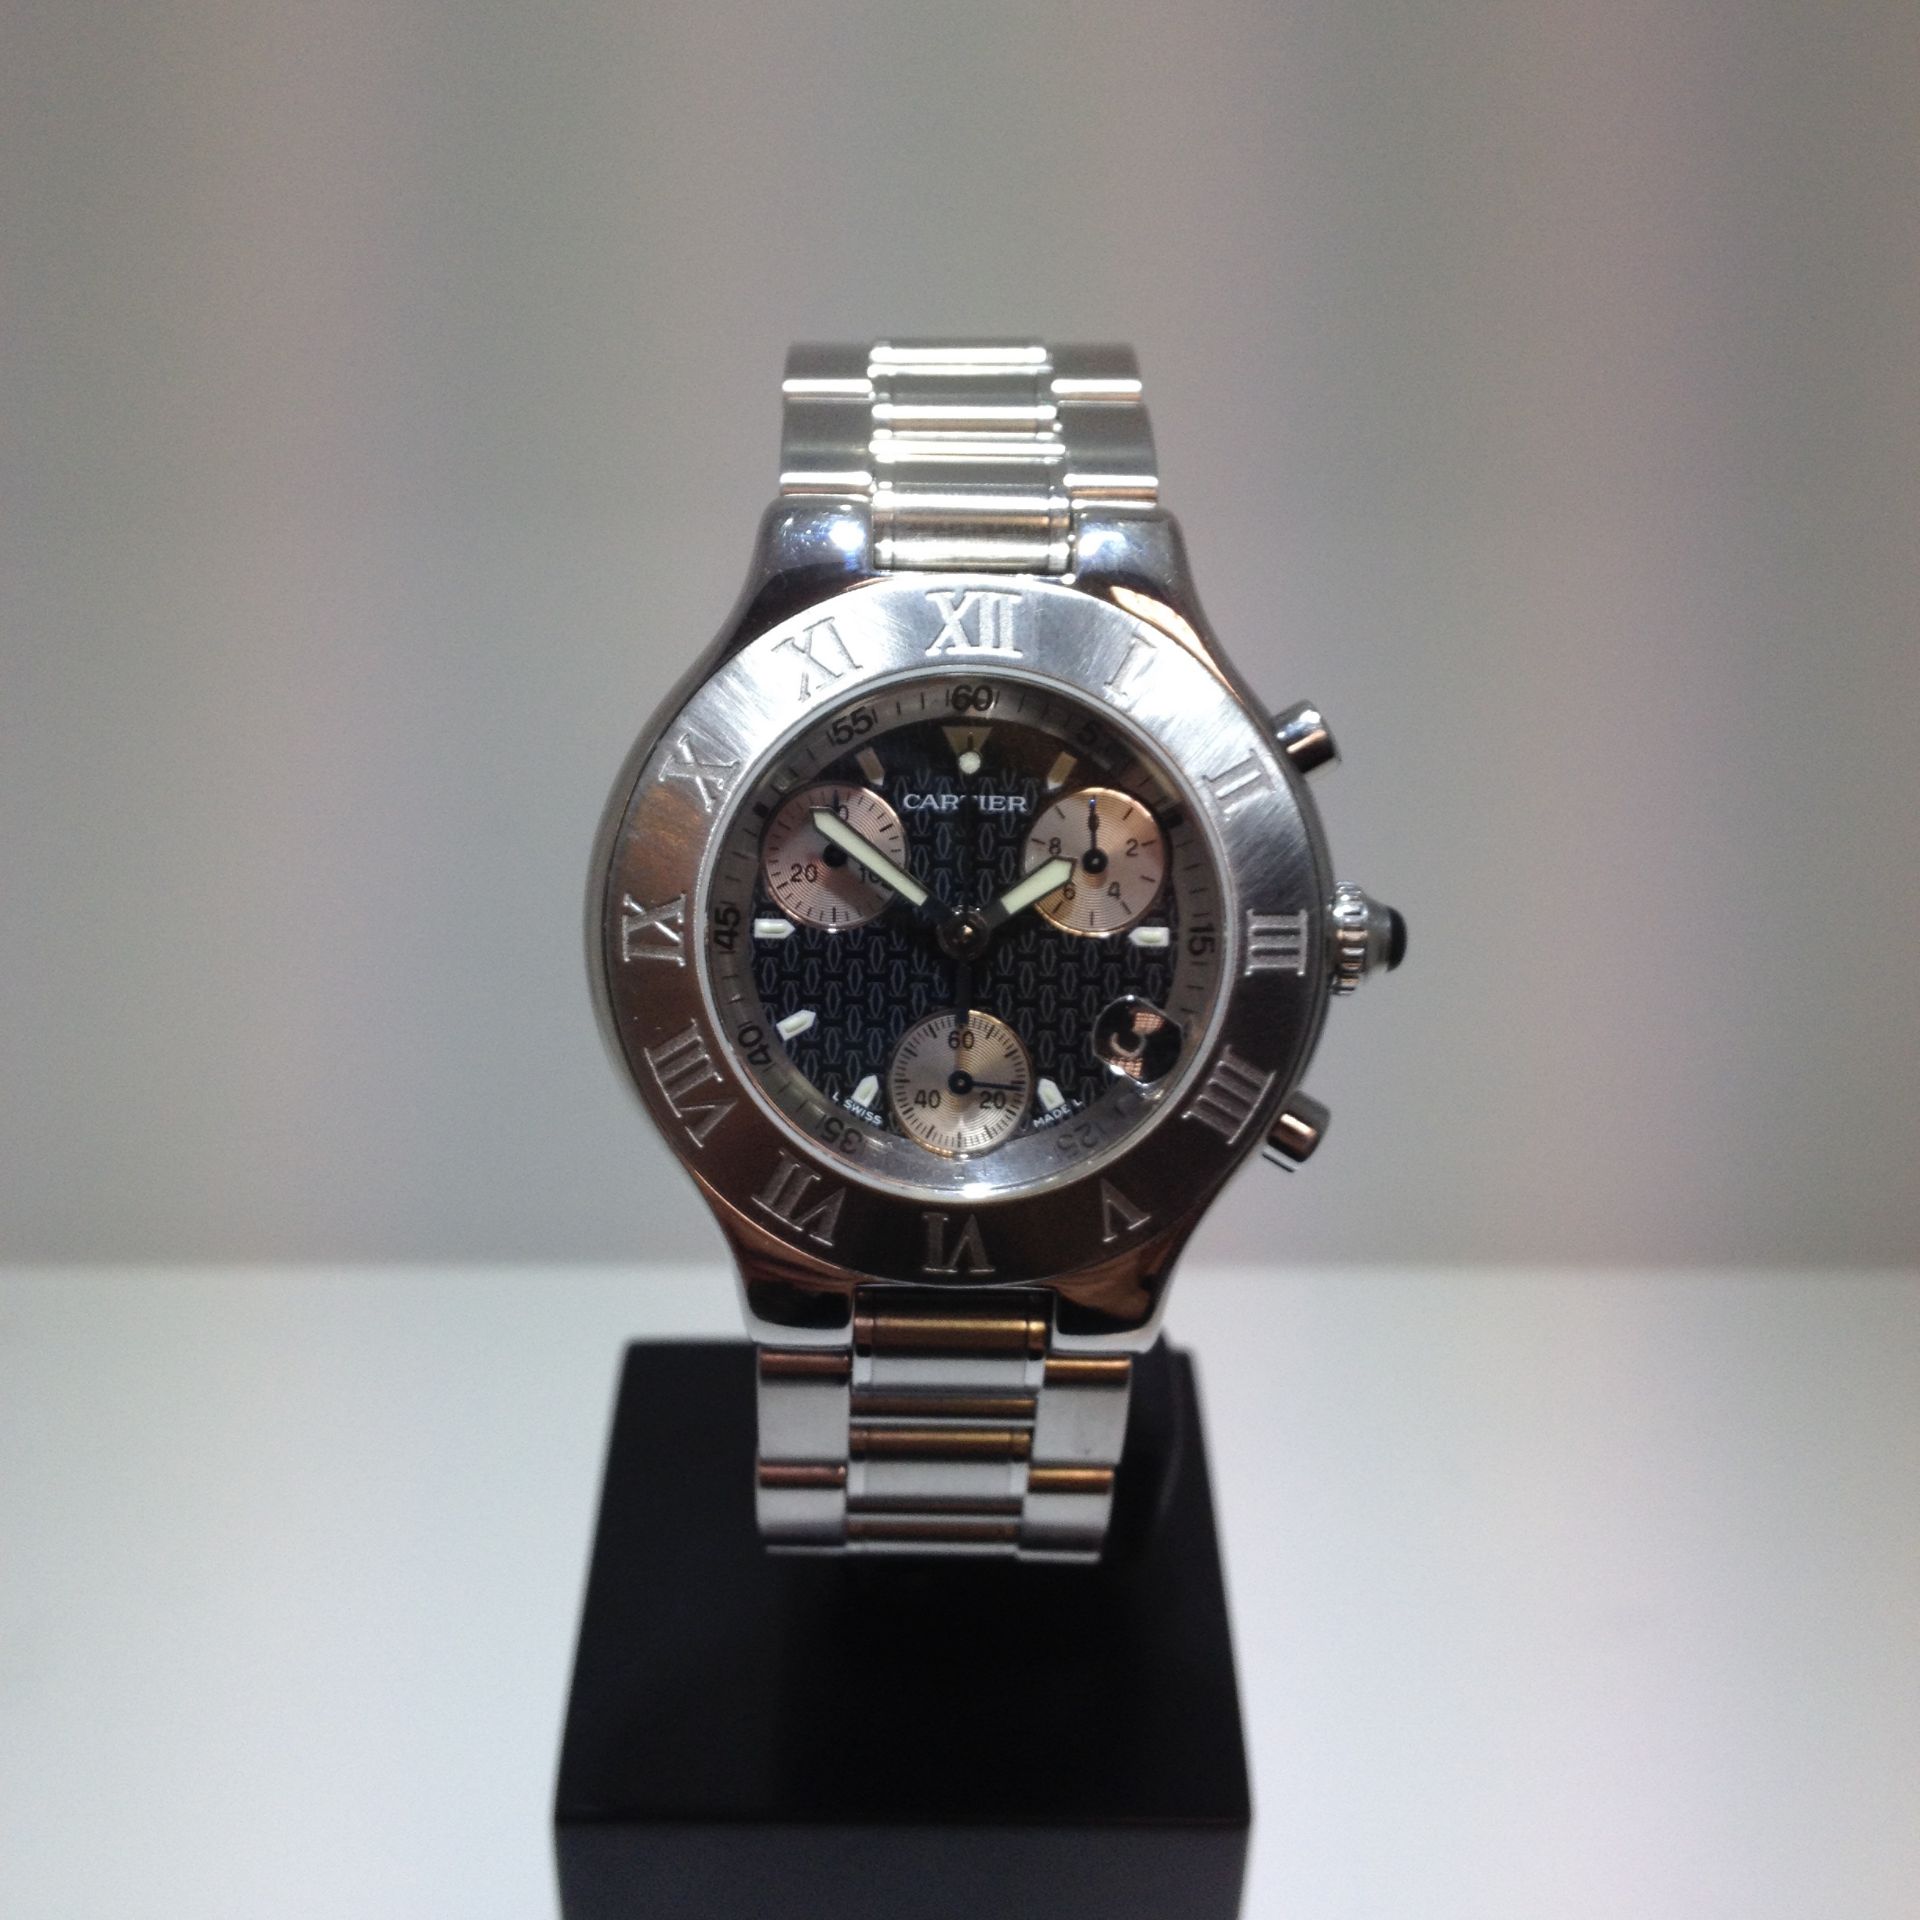 Cartier 21 Chronoscaph stainless steel watch + card